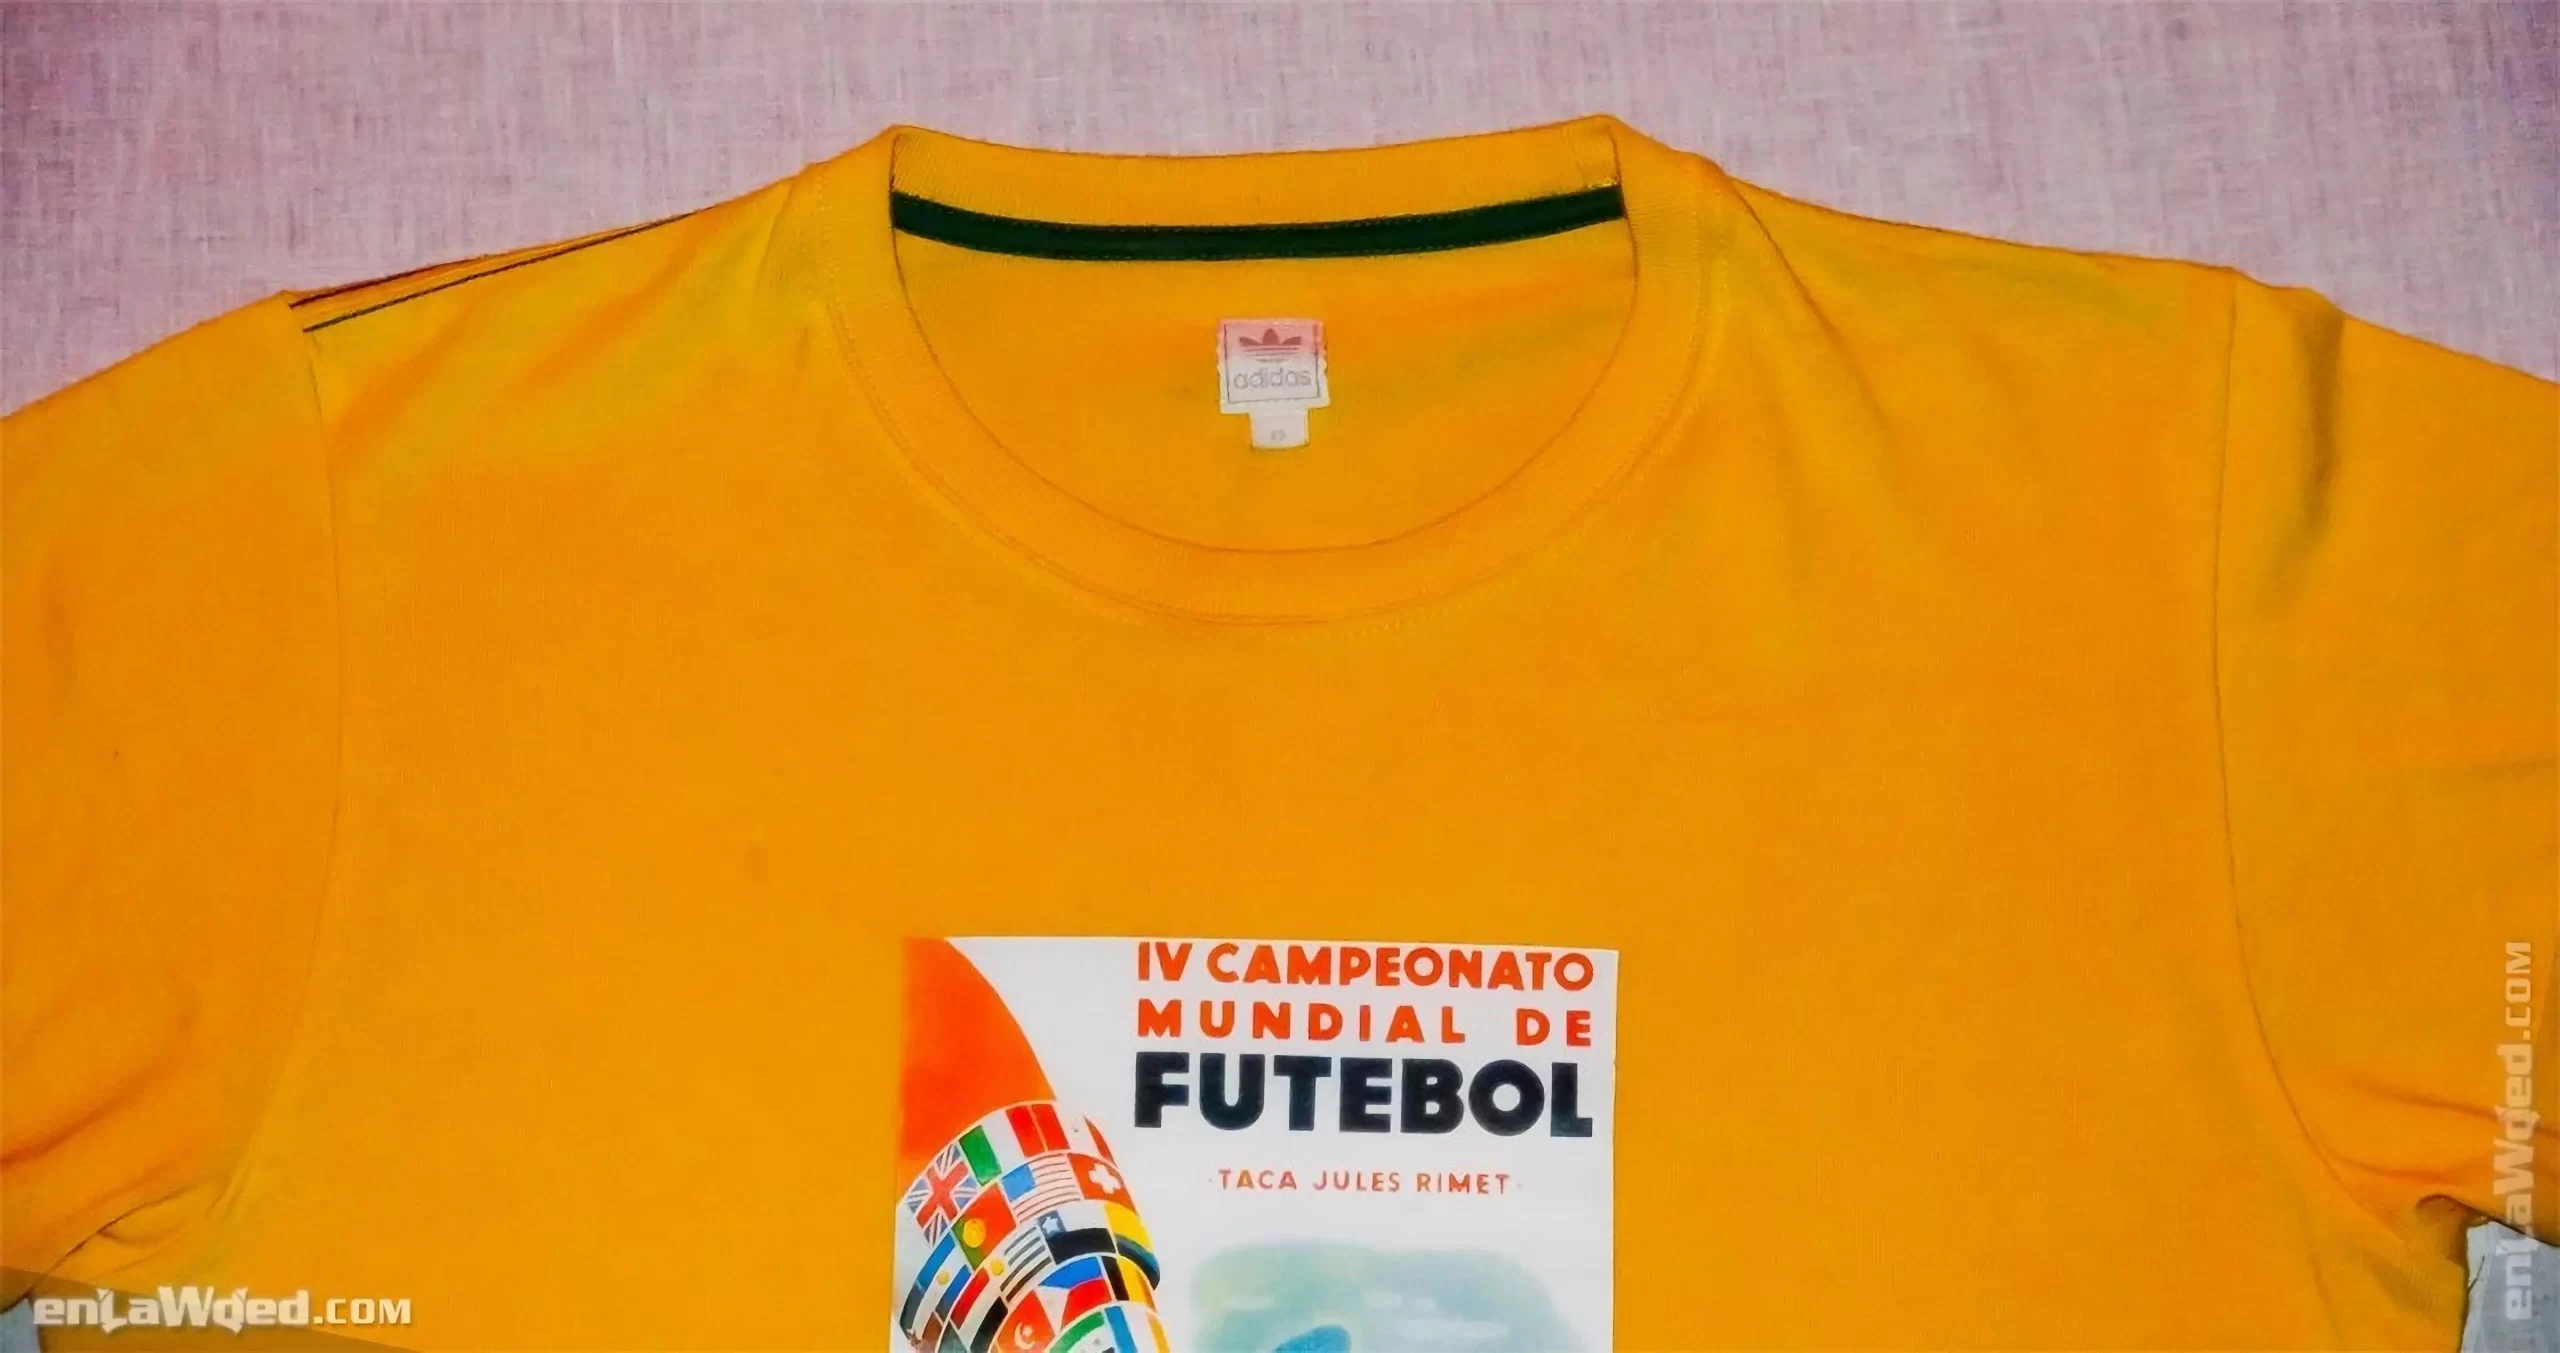 Men’s 2006 Brazil ’50 FIFA World Cup T-Shirt by Adidas: Comprehensive (EnLawded.com file #lmc3zr1alxus4d54hkc)